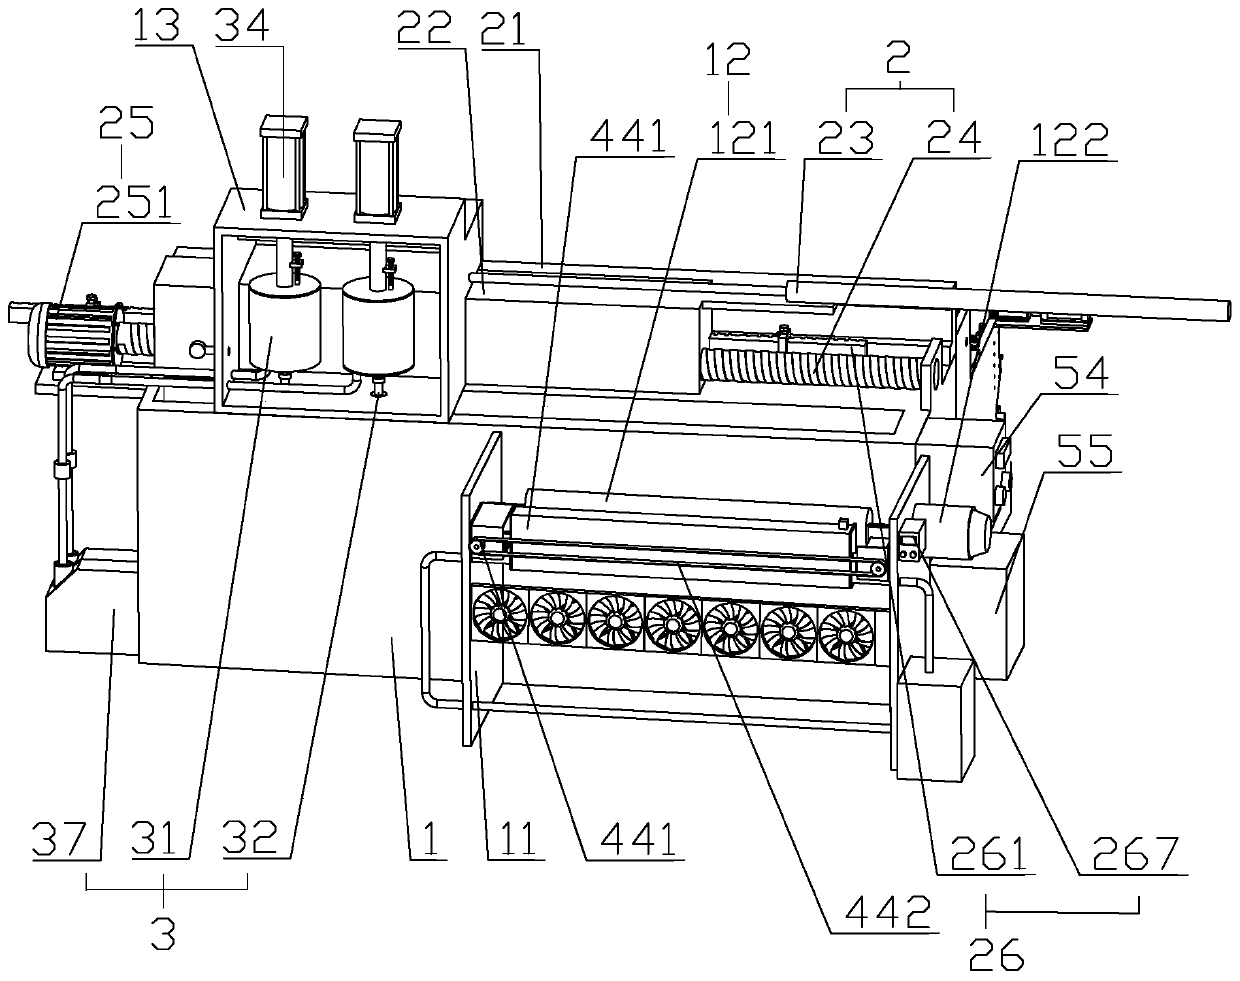 A digital printing machine